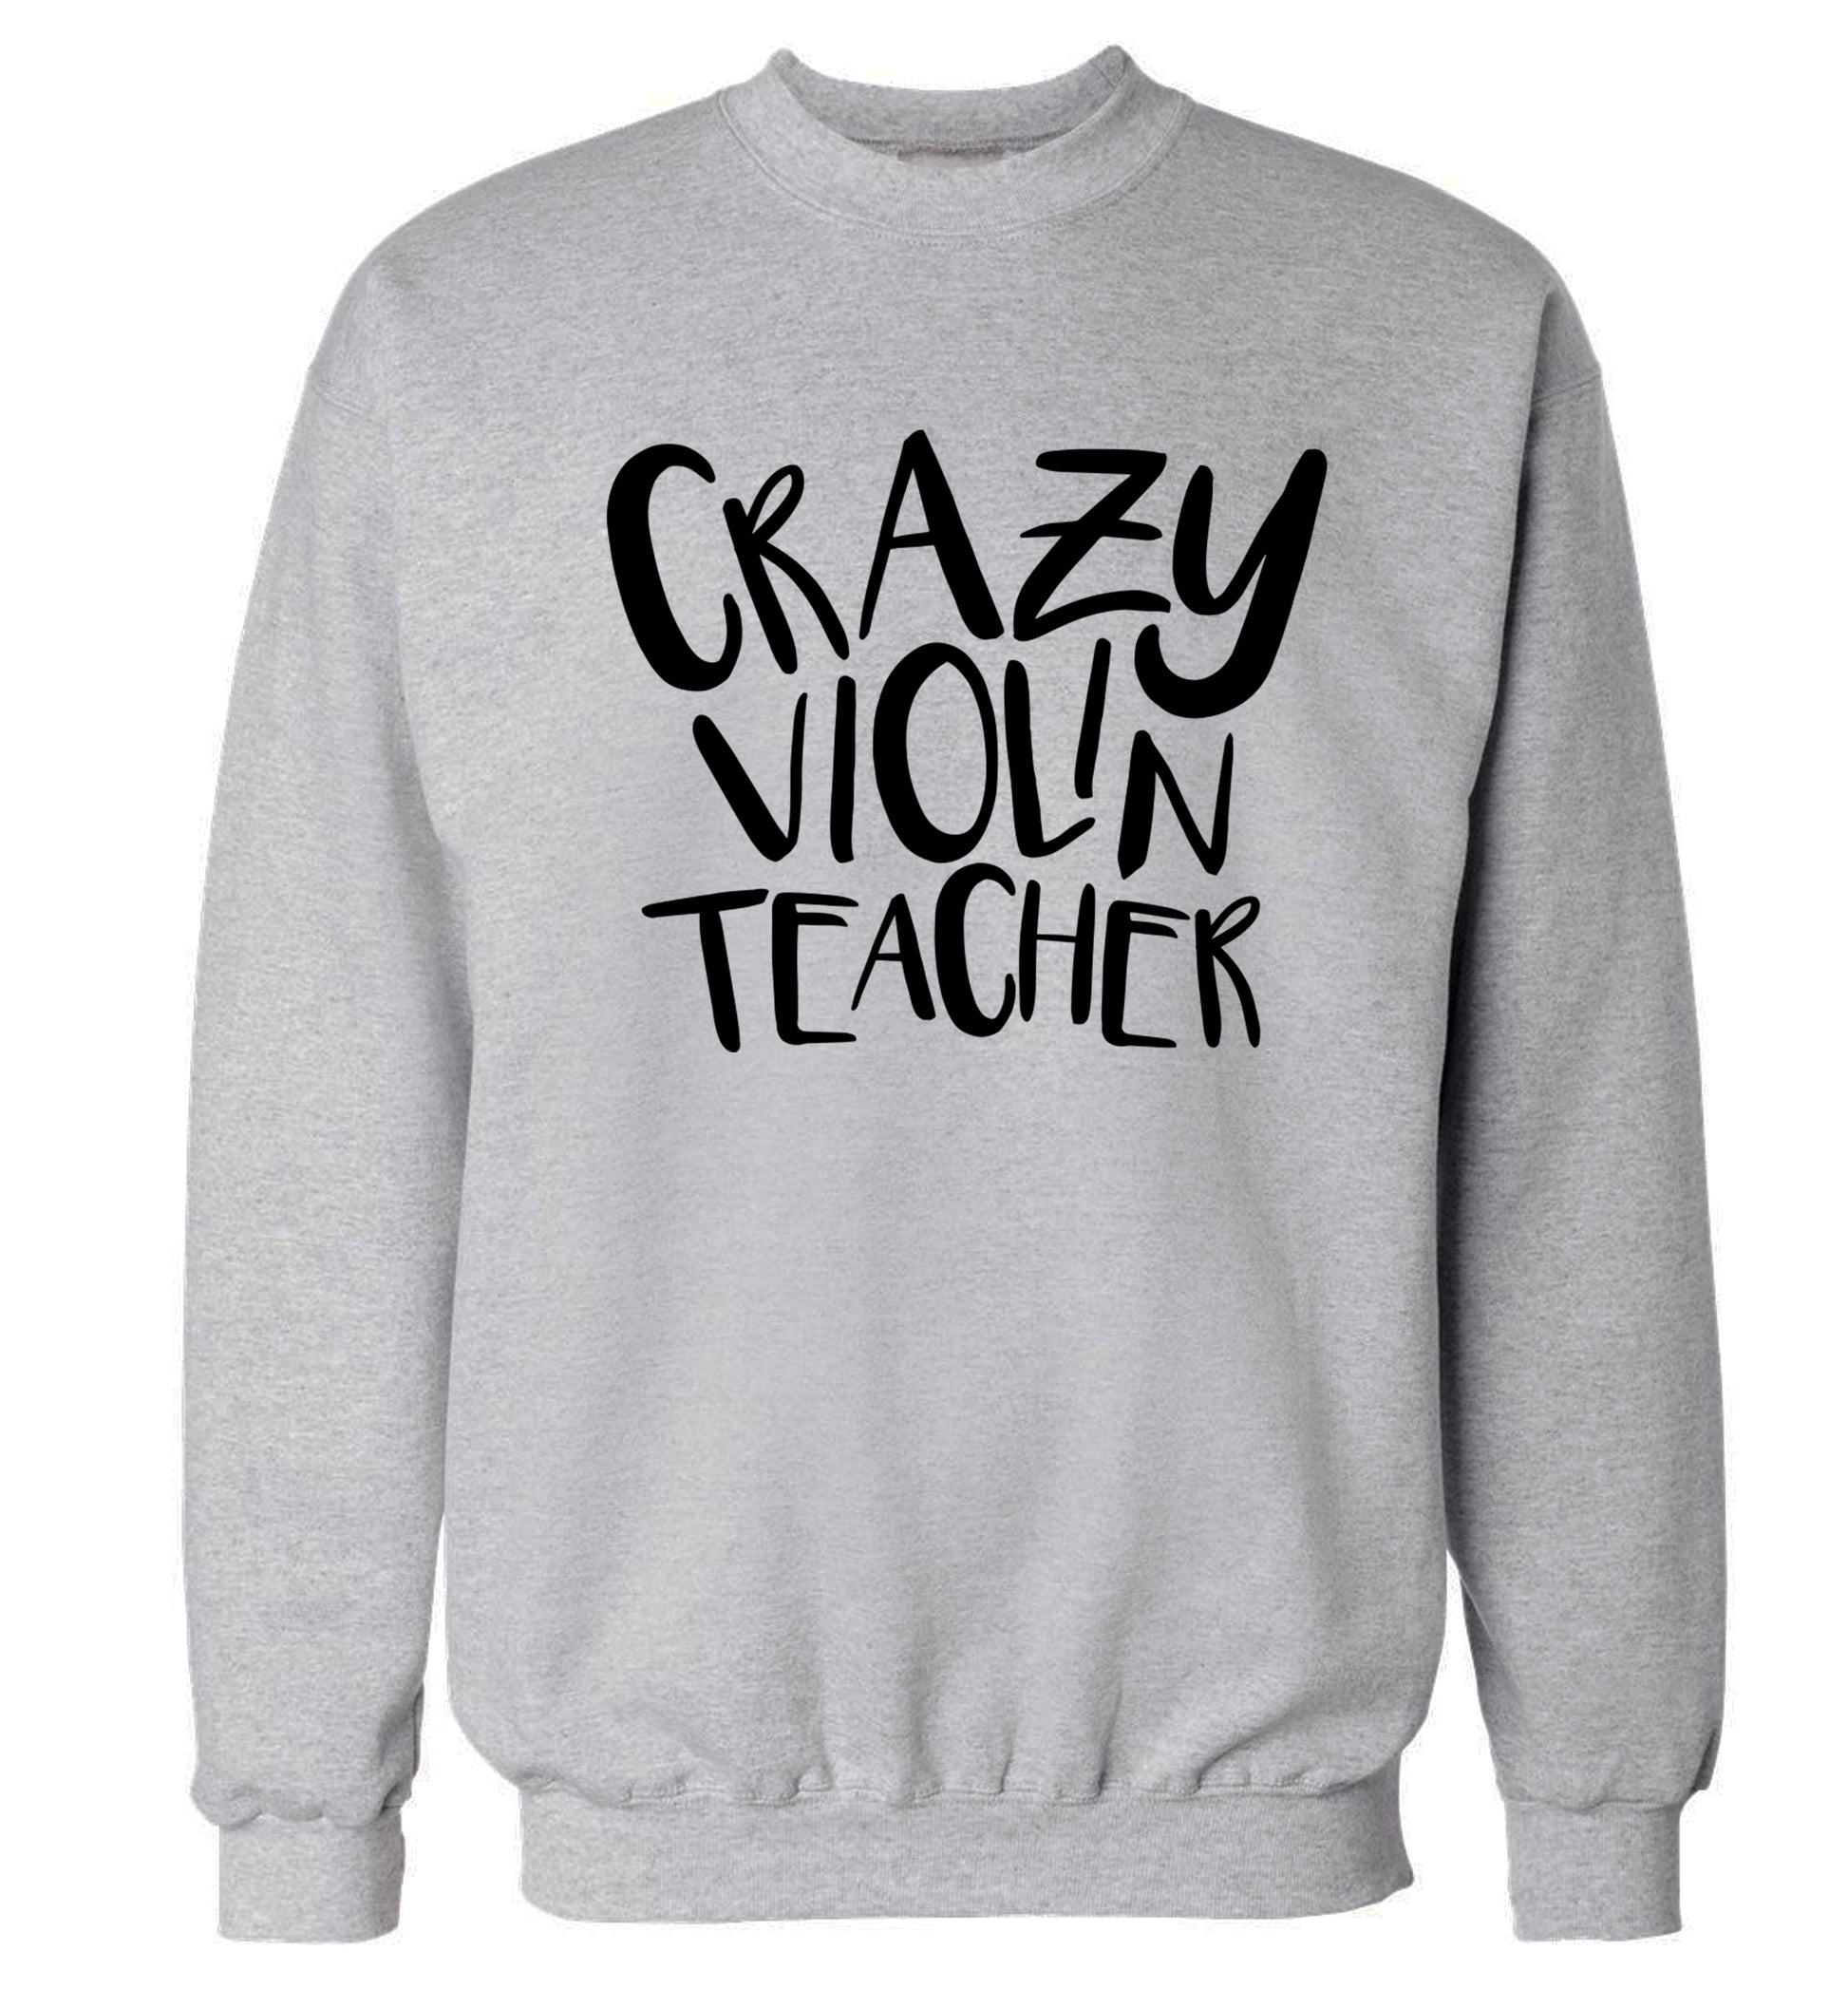 Crazy violin teacher Adult's unisex grey Sweater 2XL